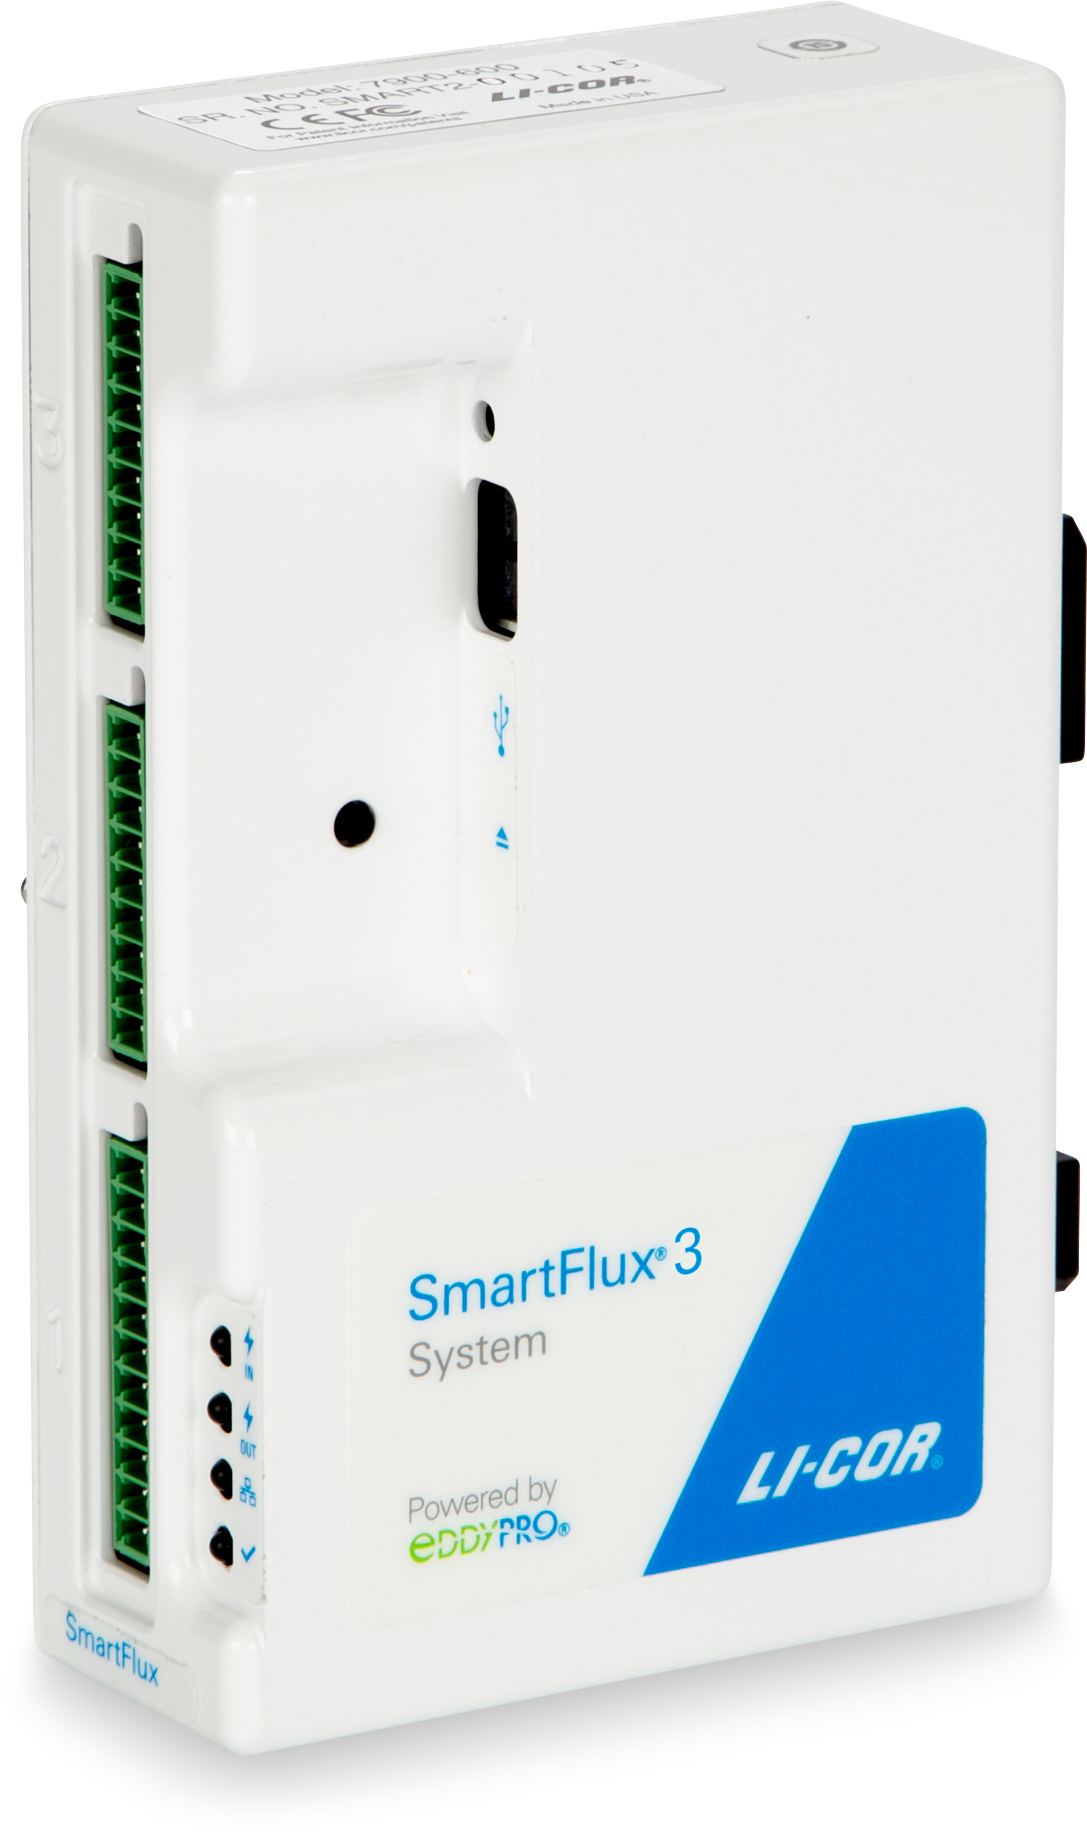 SmartFlux 3 product image